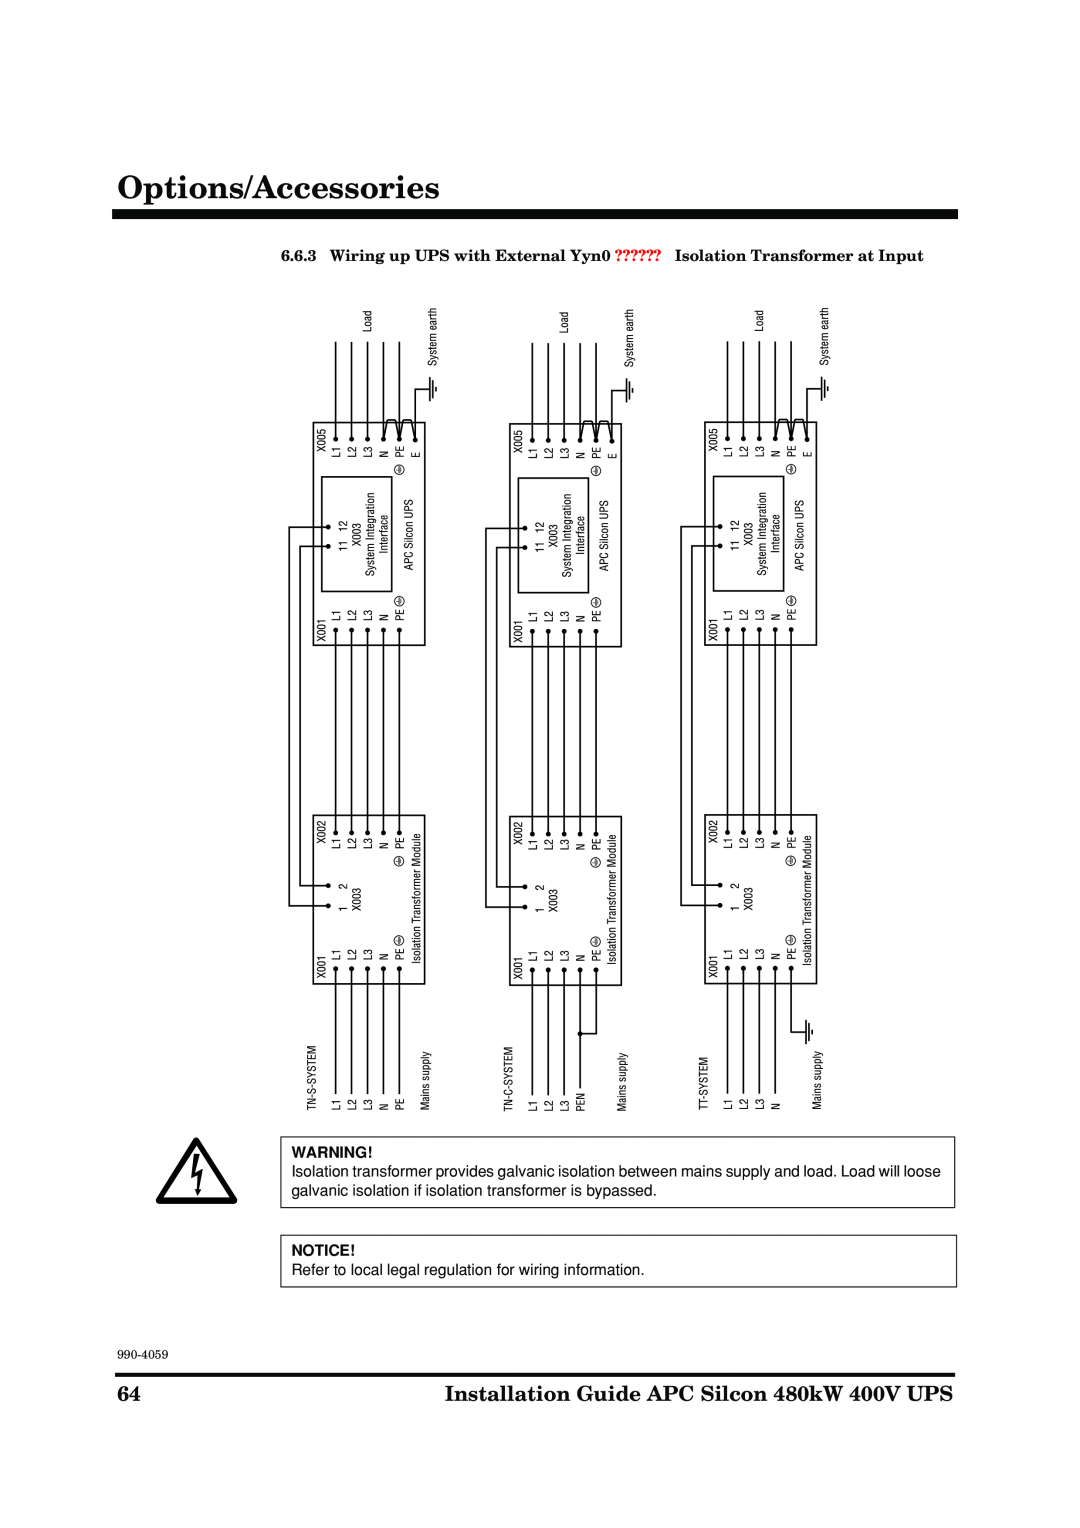 American Power Conversion manual Options/Accessories, Installation Guide APC Silcon 480kW 400V UPS, 990-4059 